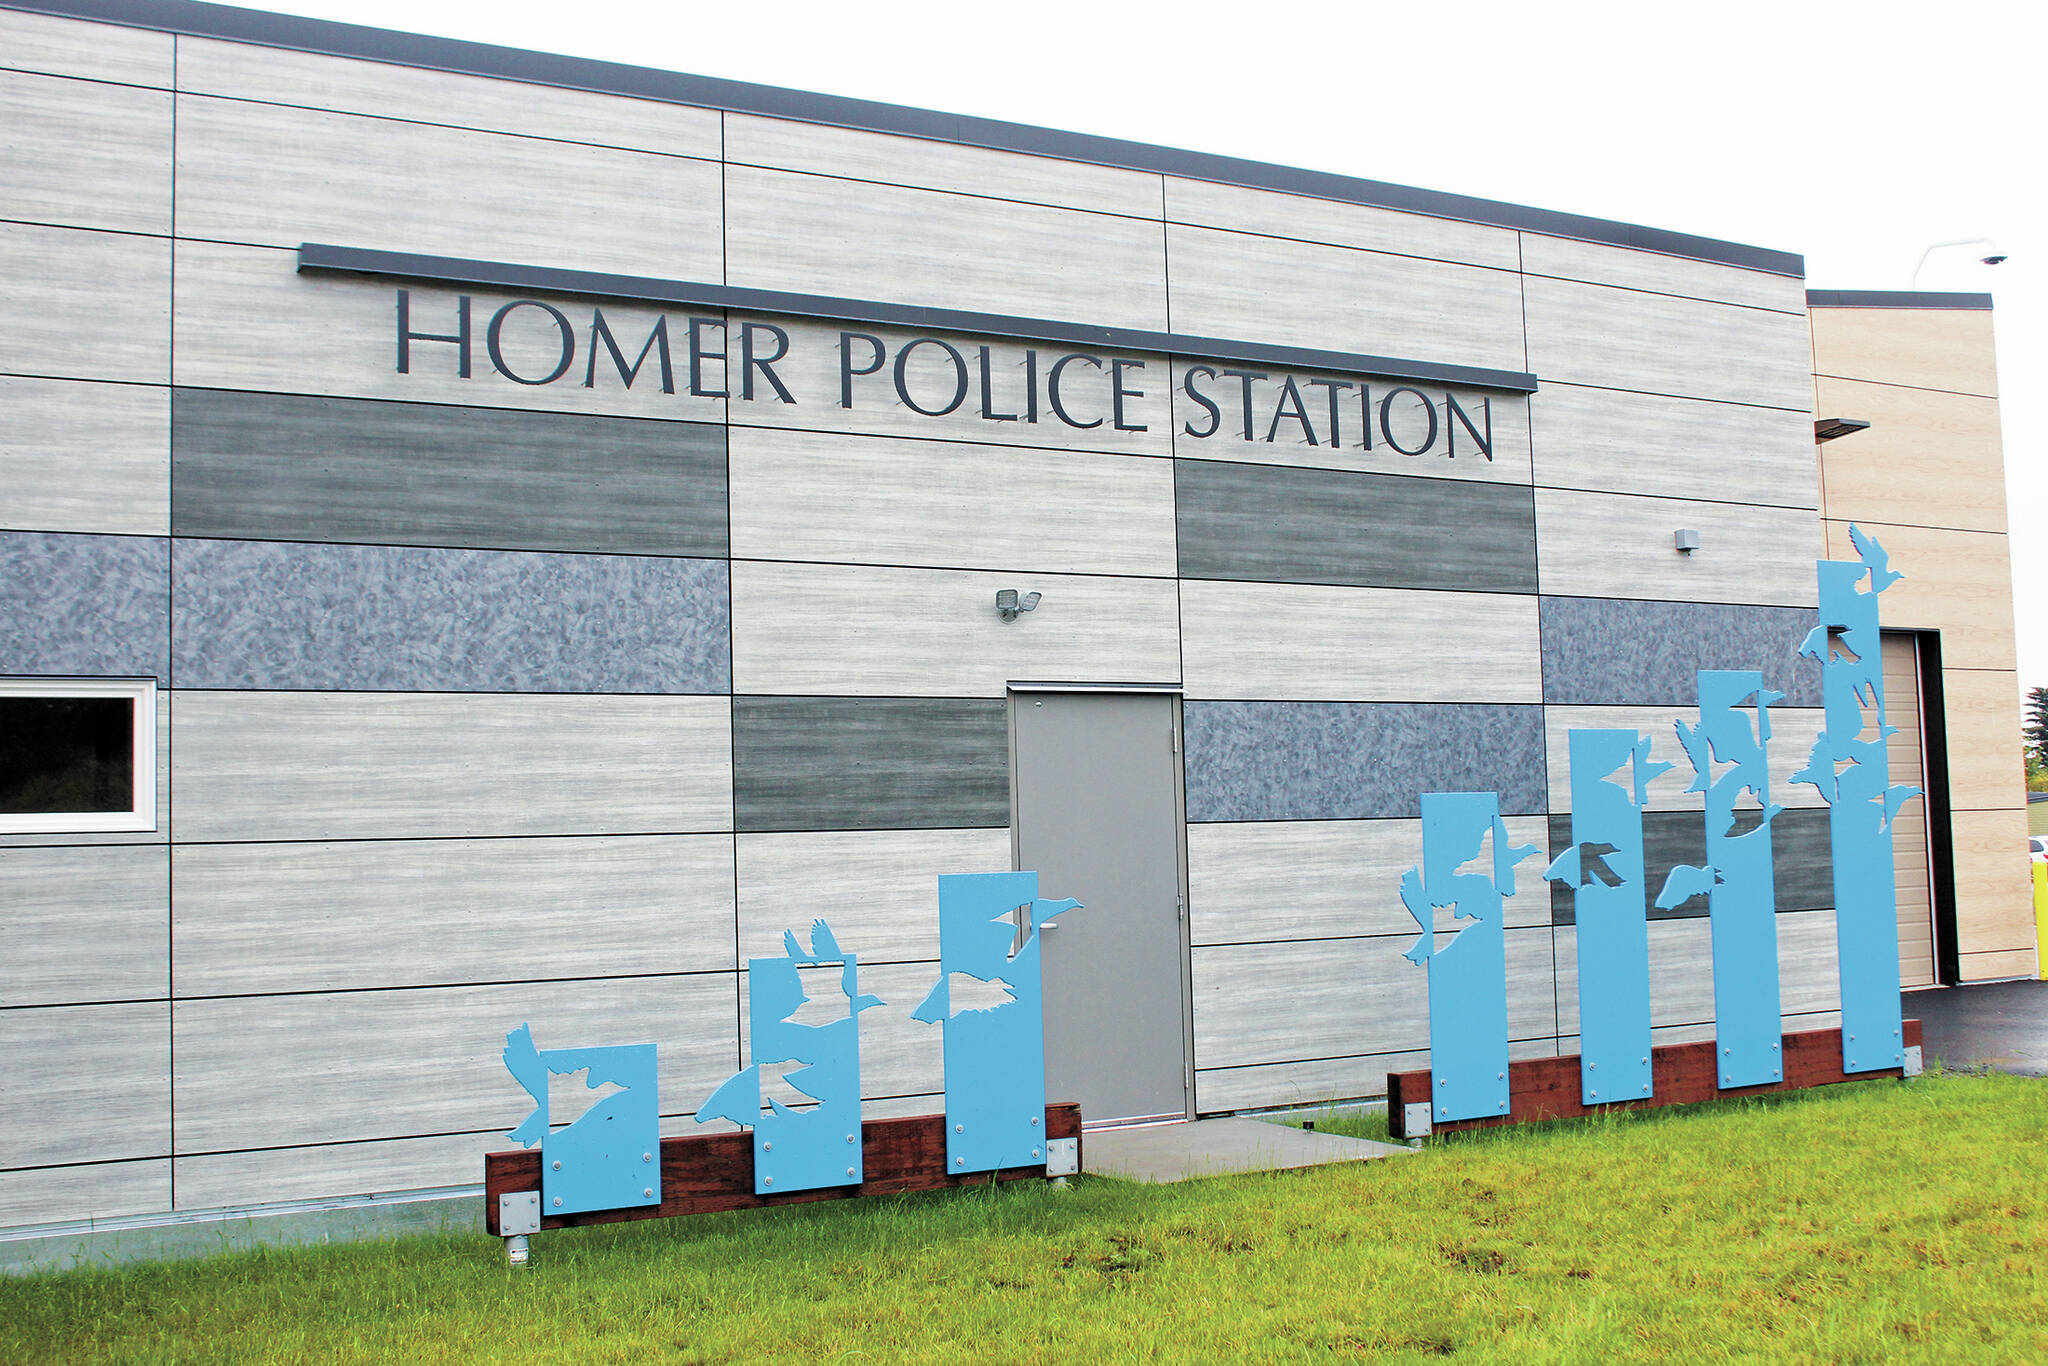 The Homer Police Station as seen Thursday, Sept. 24, 2020 in Homer, Alaska. (Photo by Megan Pacer/Homer News file)